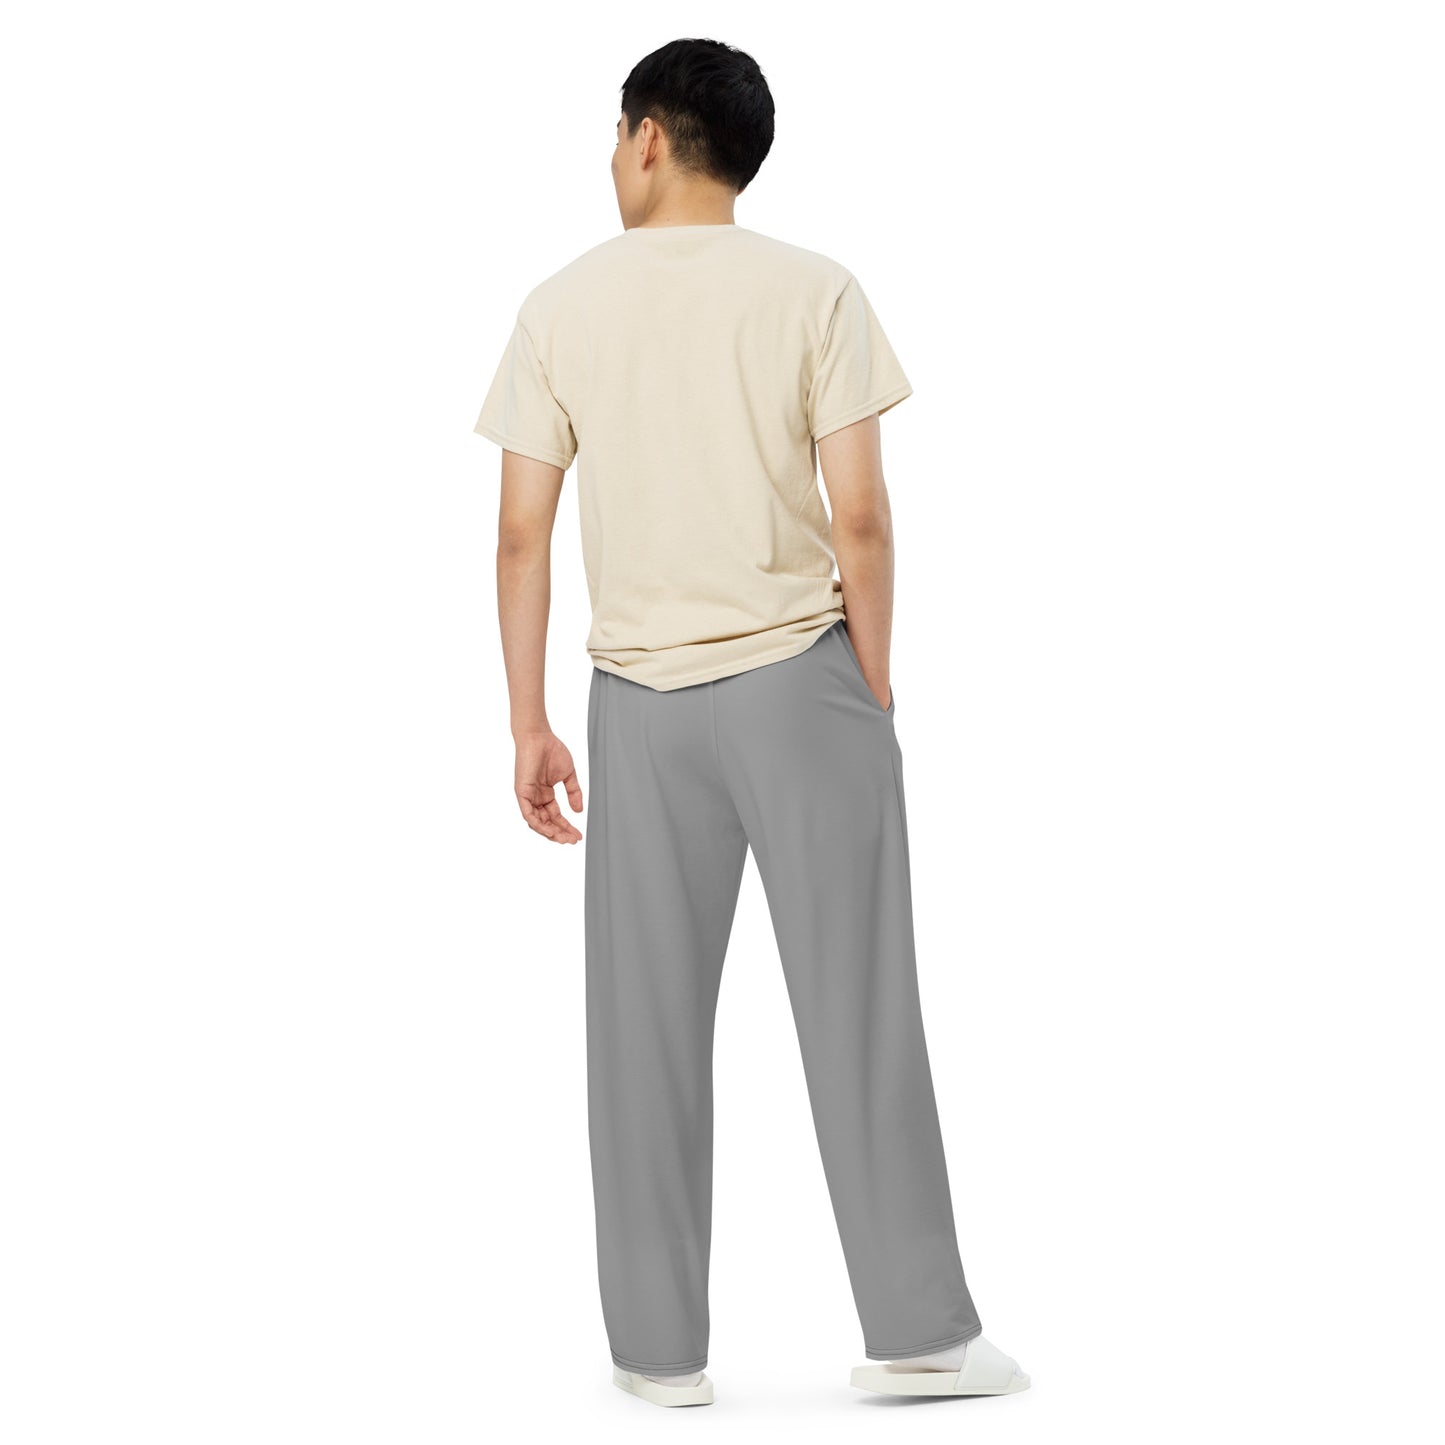 Grey unisex wide-leg pants